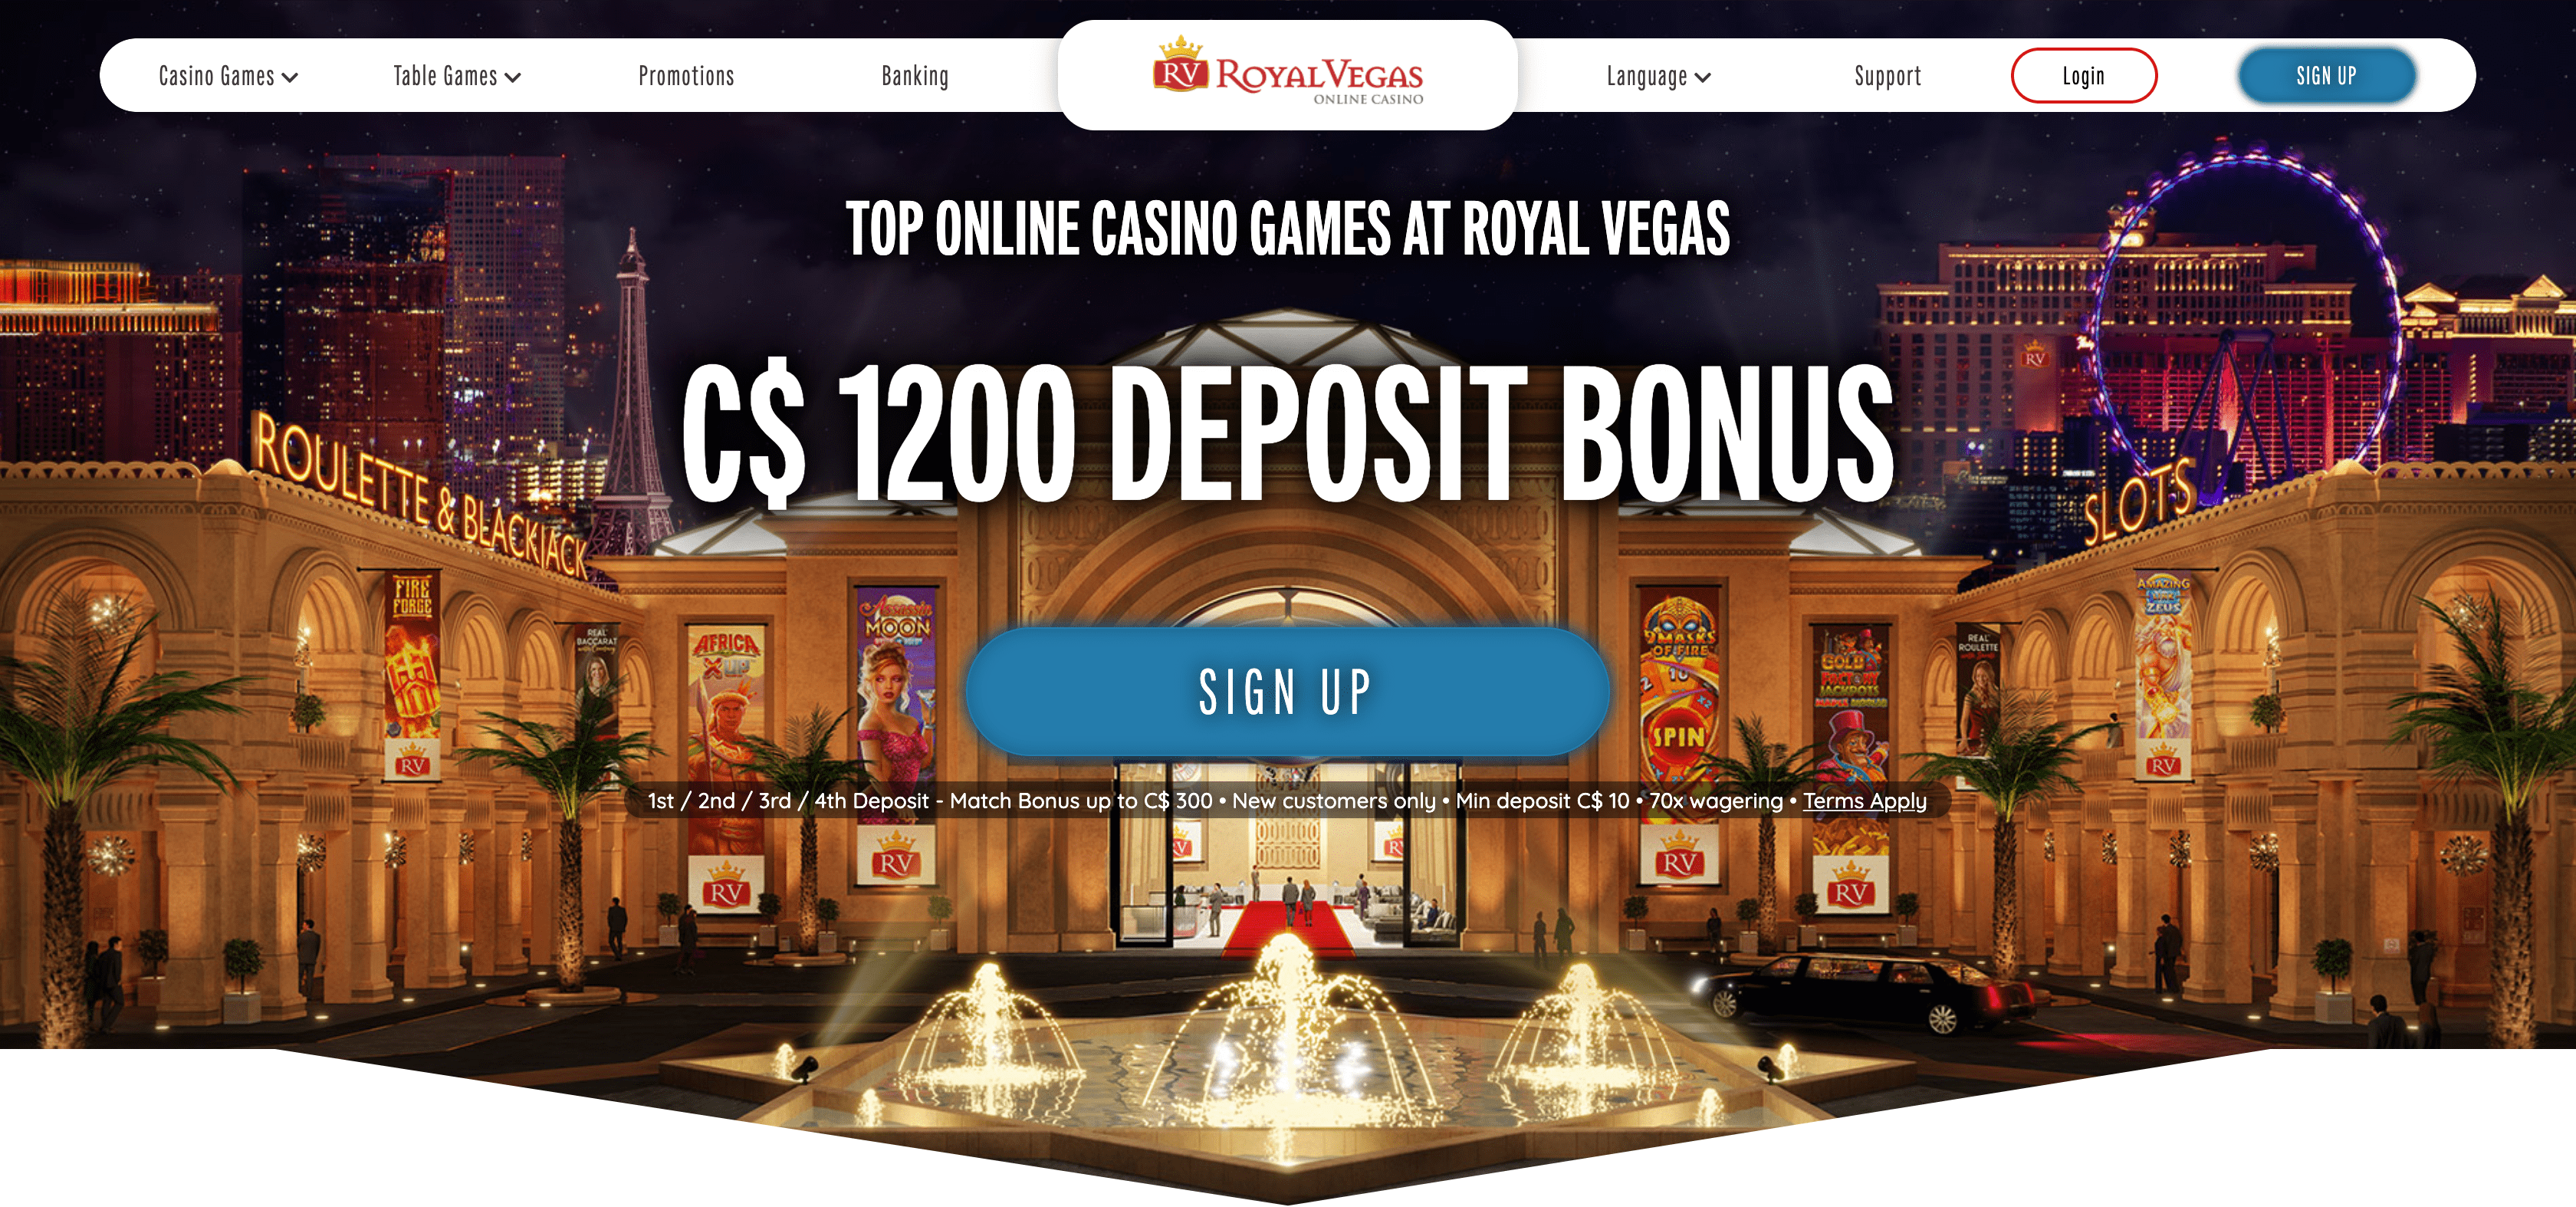 Royal Vegas Main Page